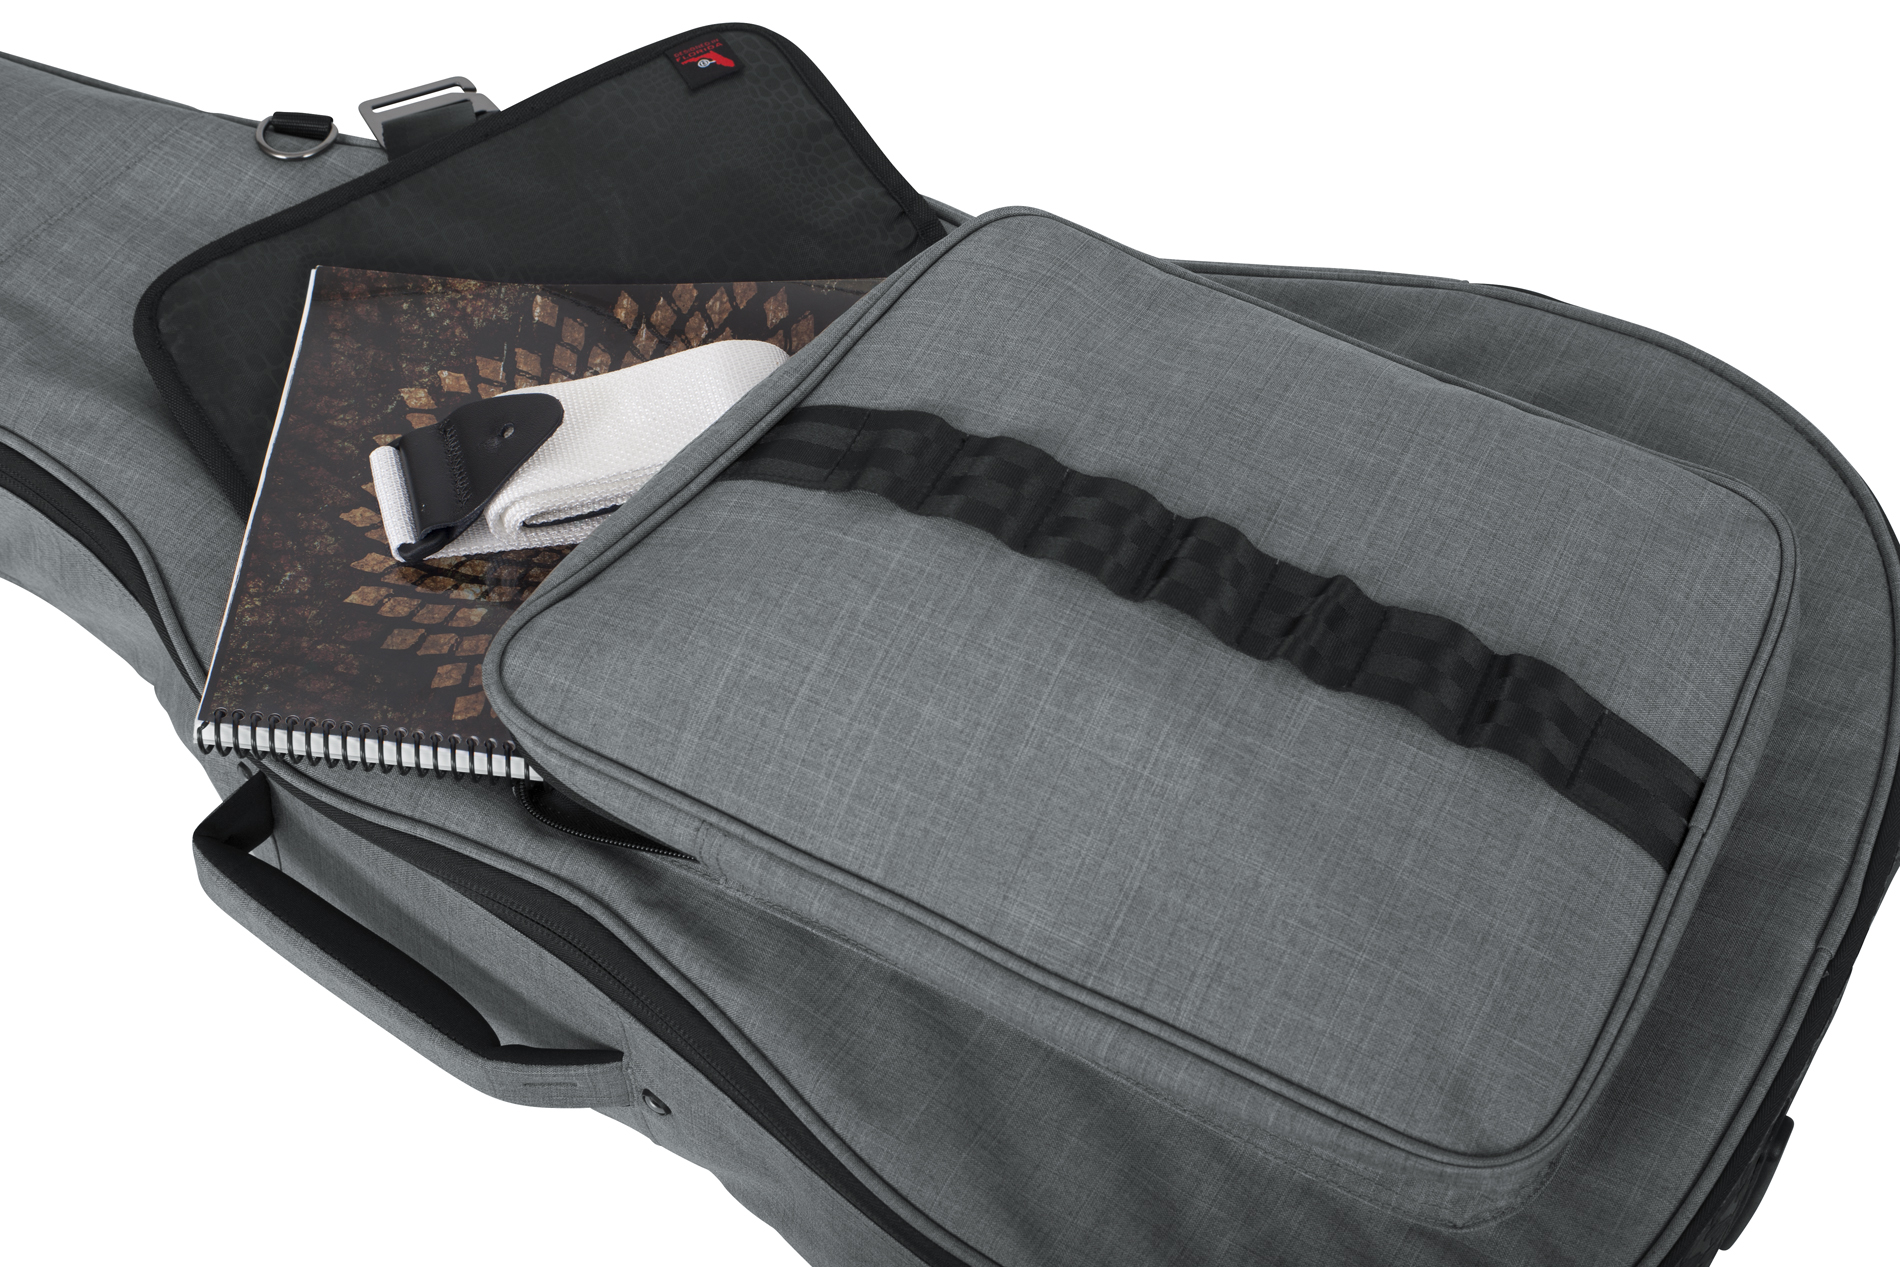 Transit Acoustic Guitar Bag; Light Grey-GT-ACOUSTIC-GRY